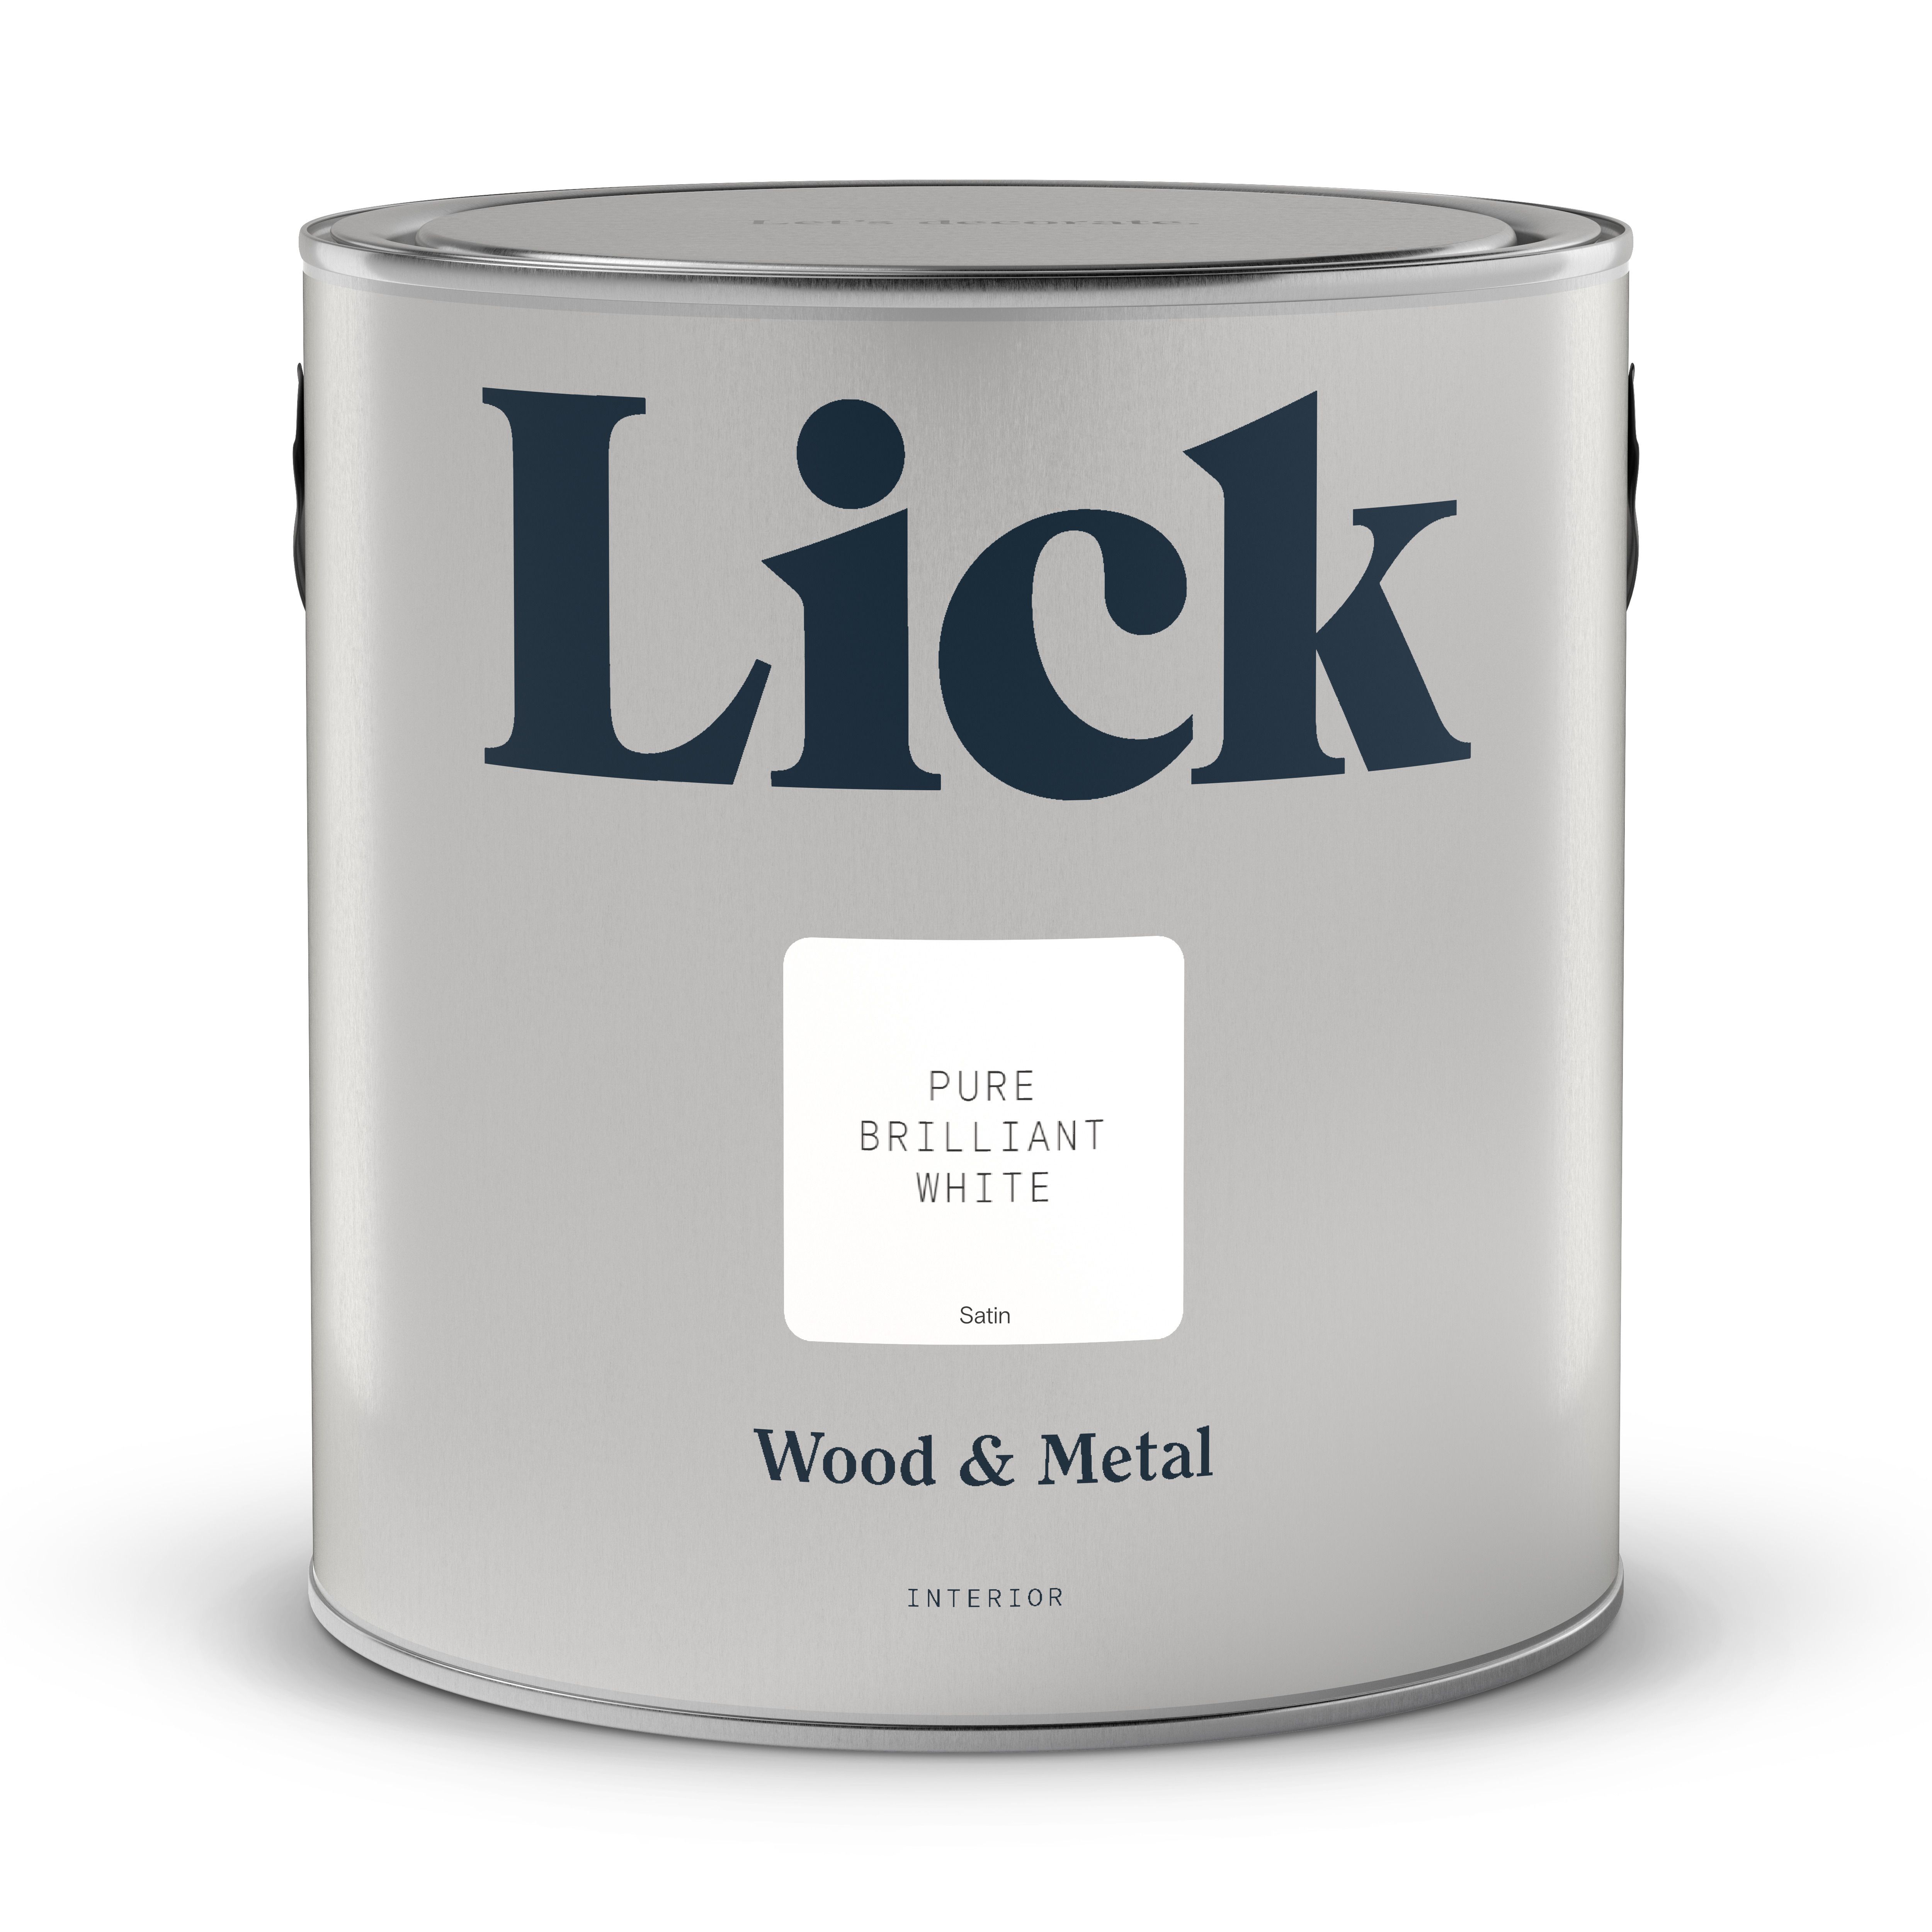 Lick Pure Brilliant White Satin Metal & wood paint, 2.5L